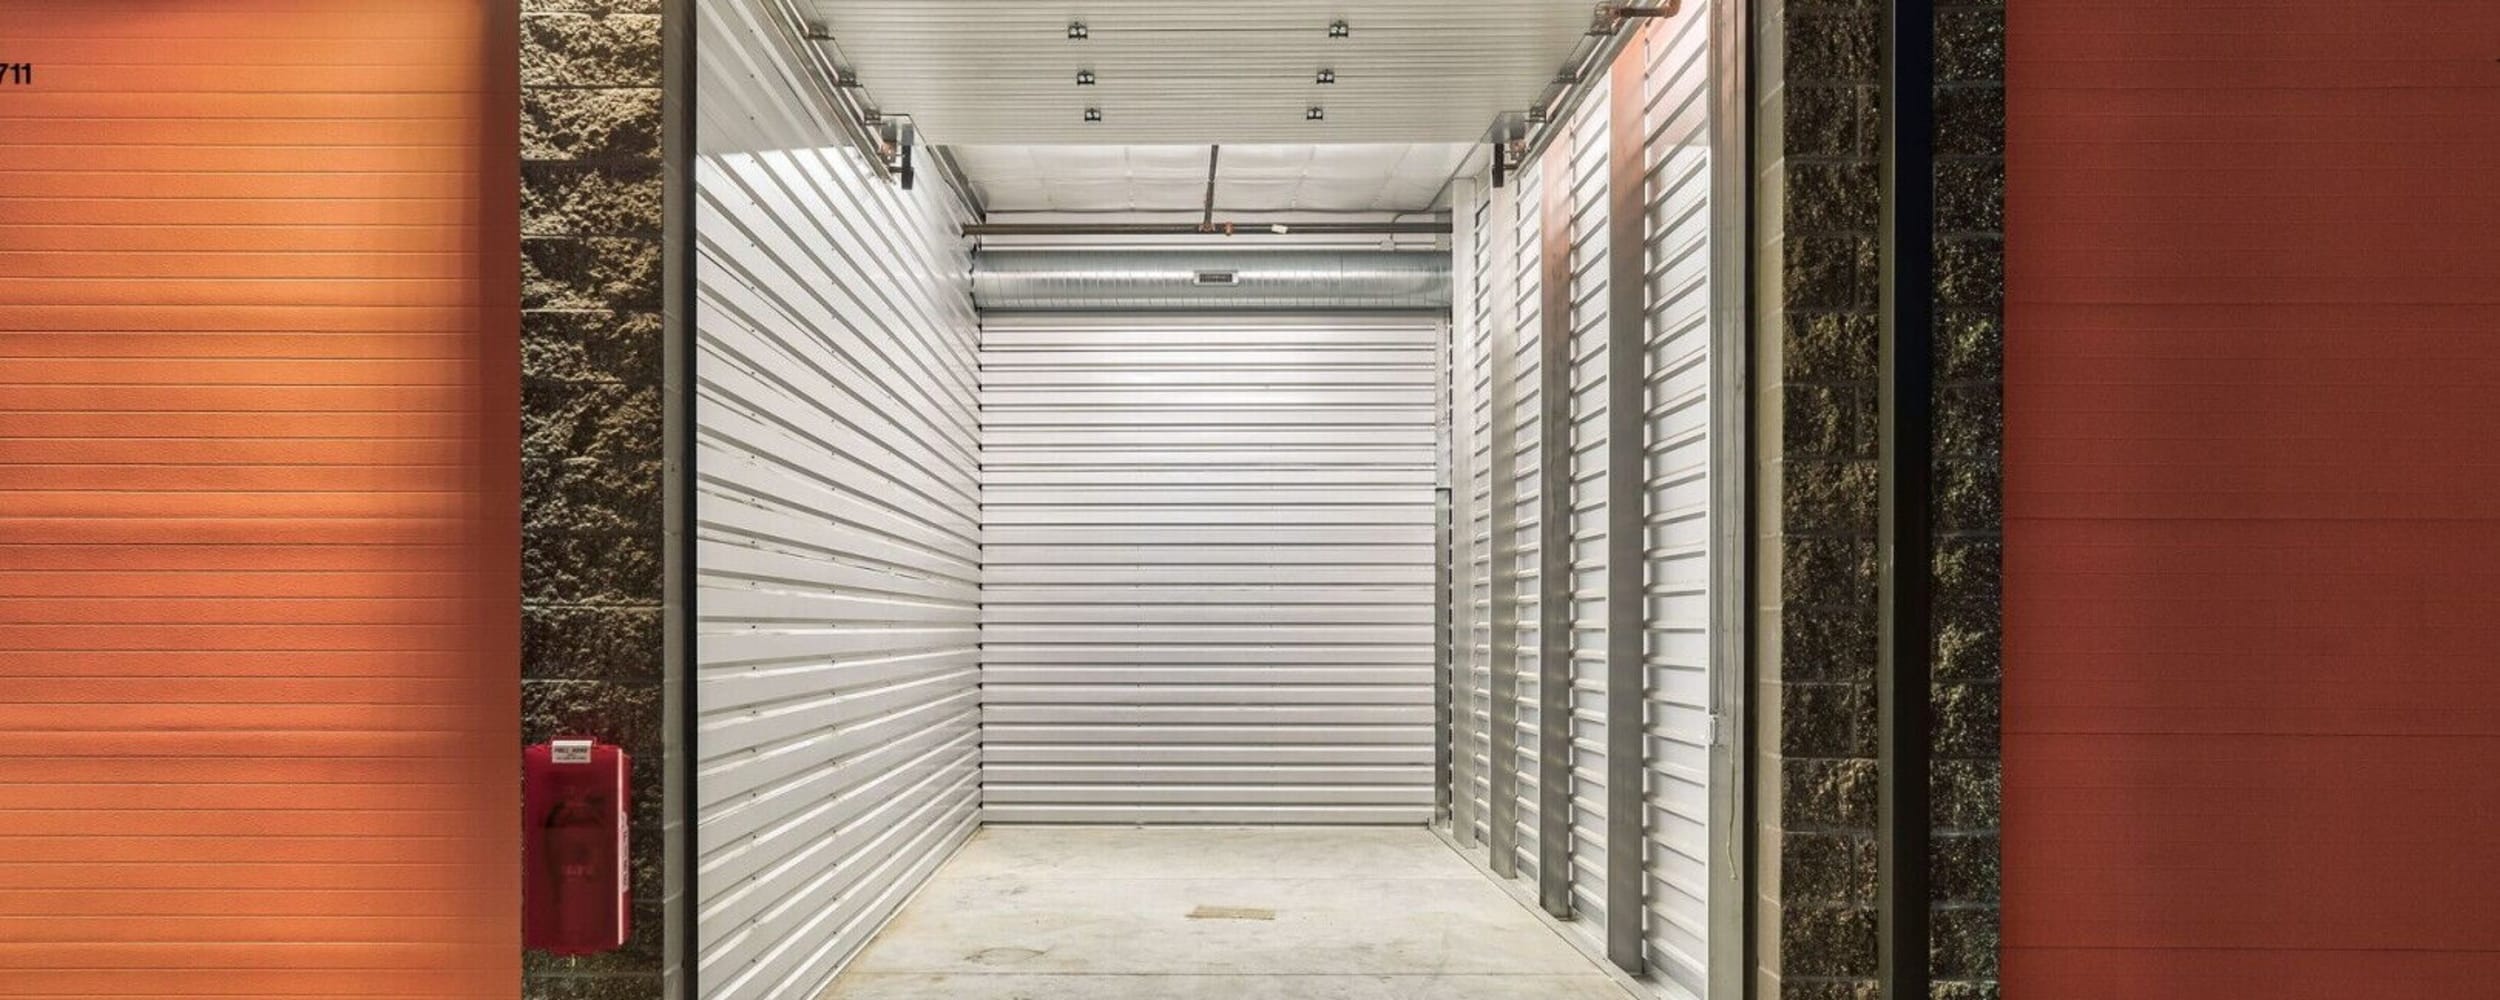 Exterior storage units at Advanced Heated Self Storage Bellingham in Bellingham, Washington